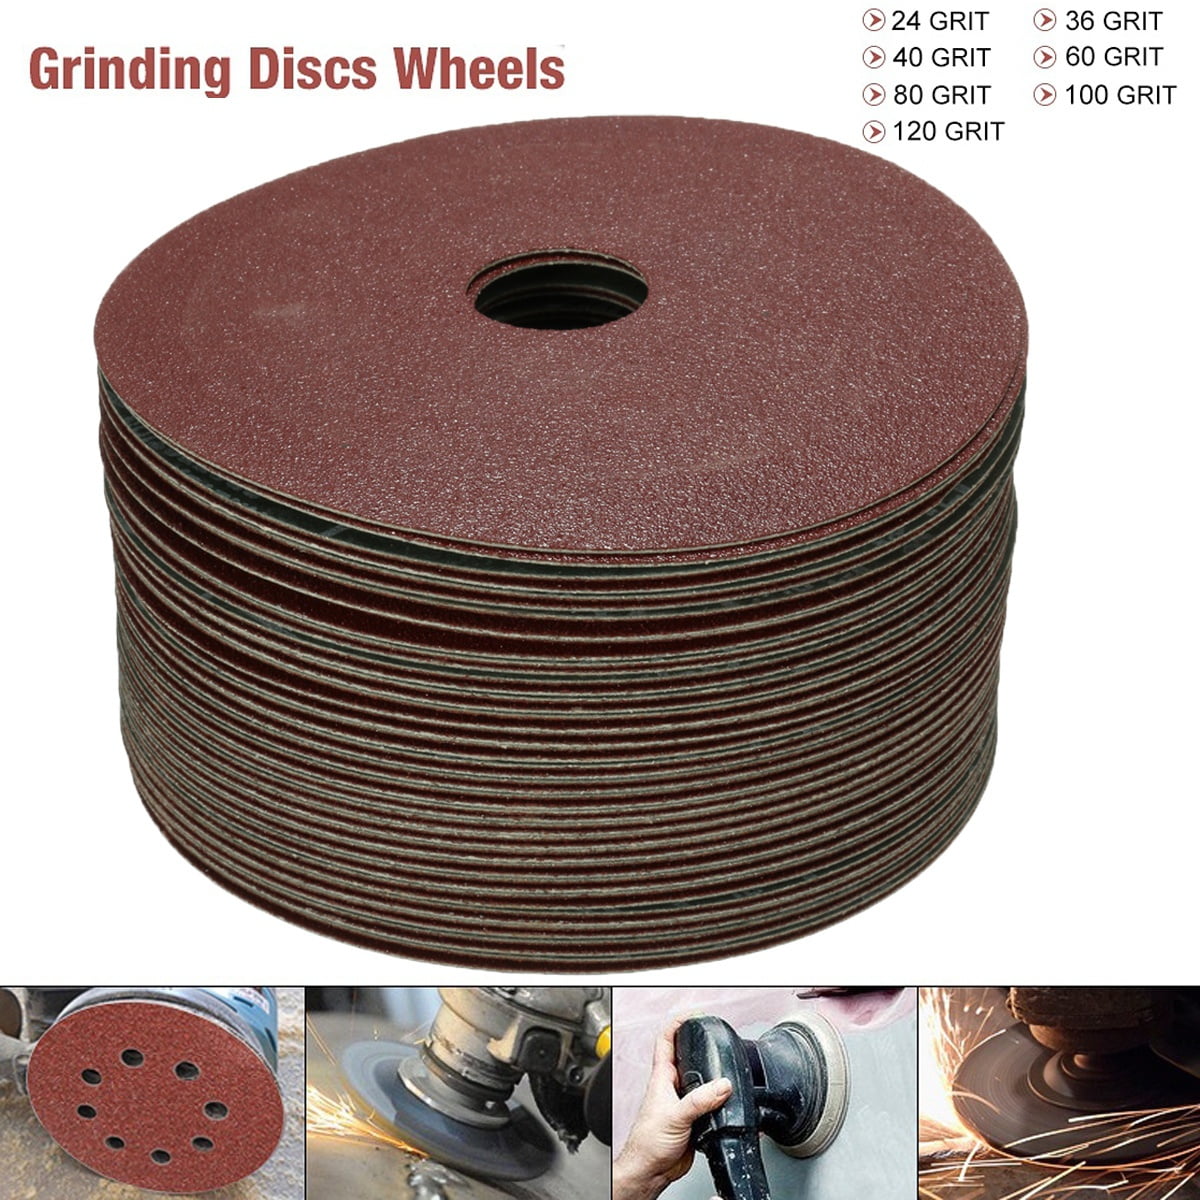 Abracs top quality fibre sanding discs for angle grinders 